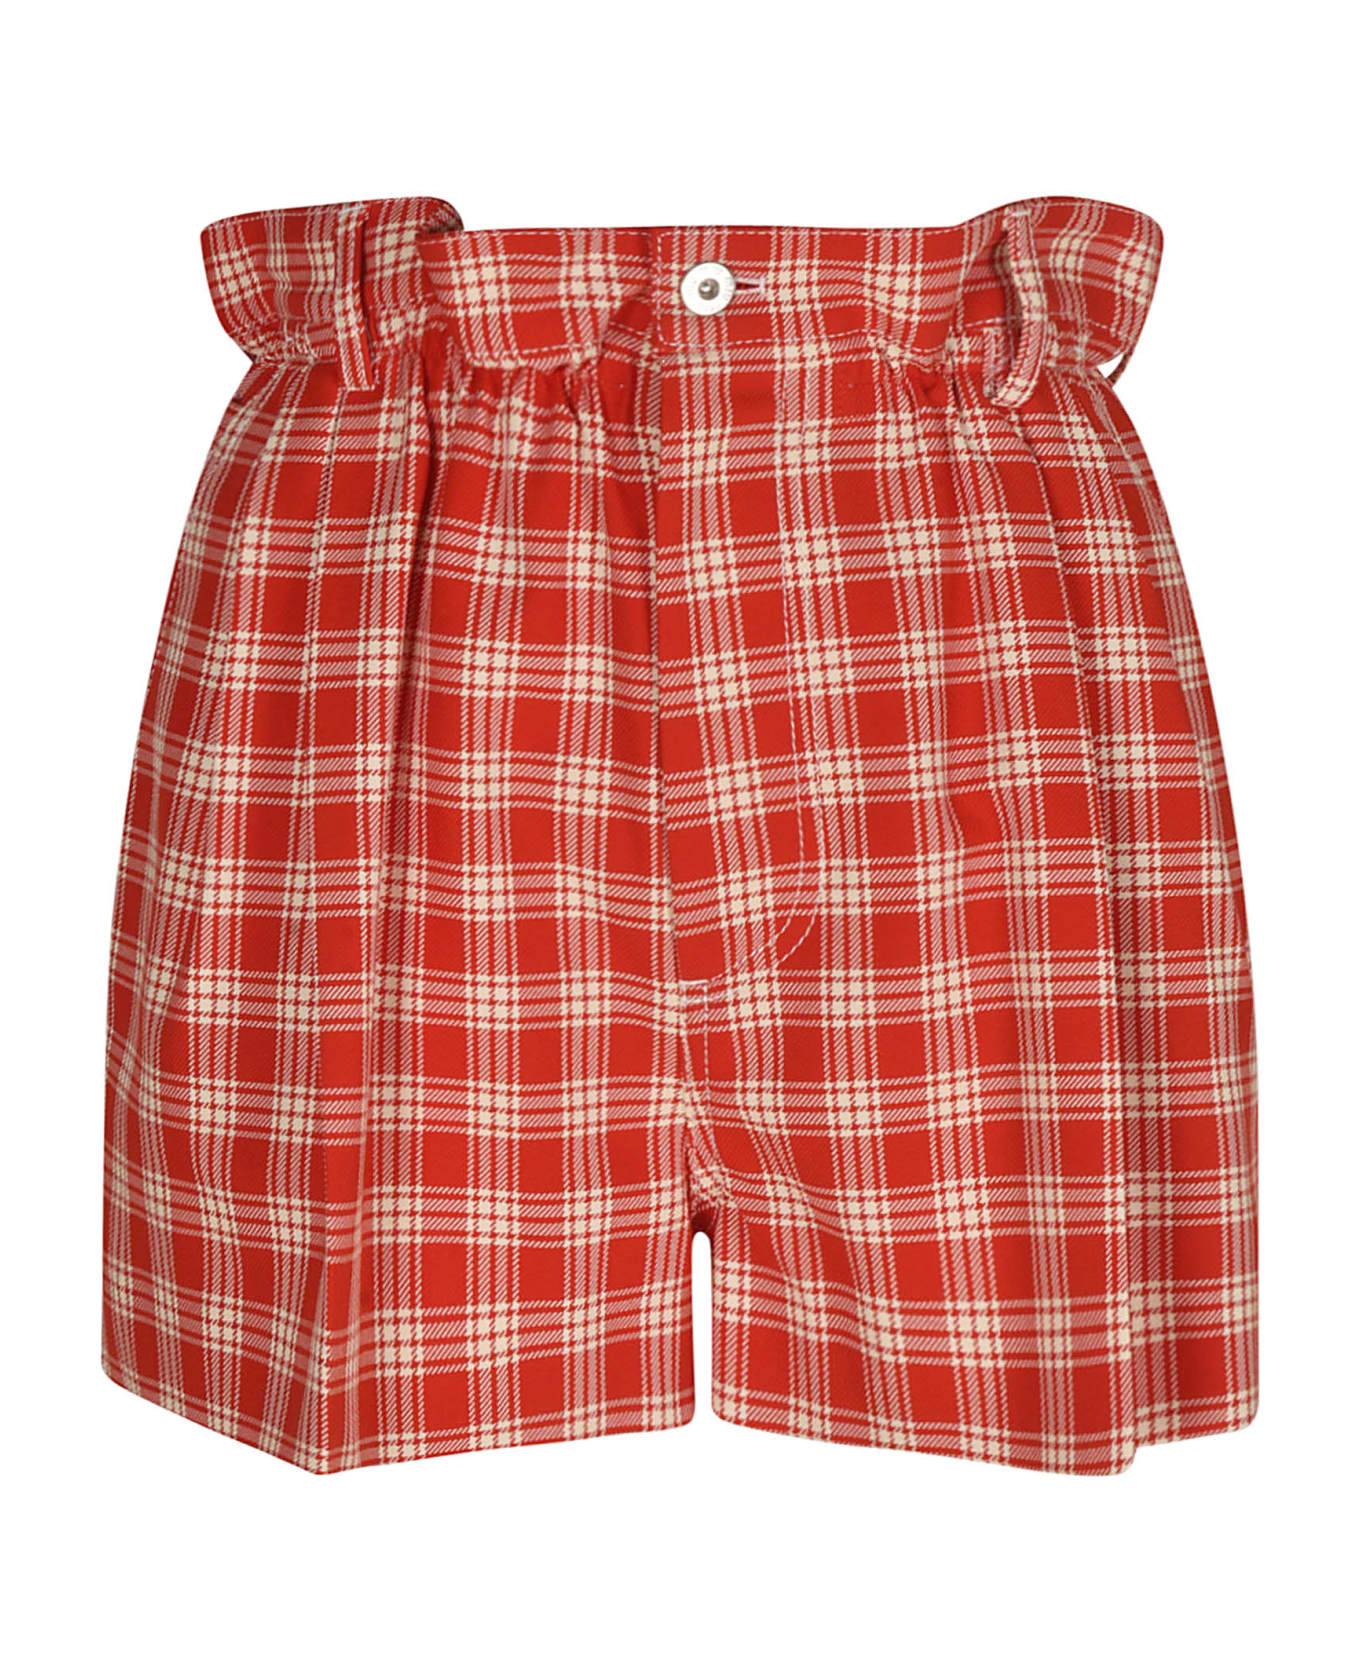 Miu Miu Check Shorts - Red/White